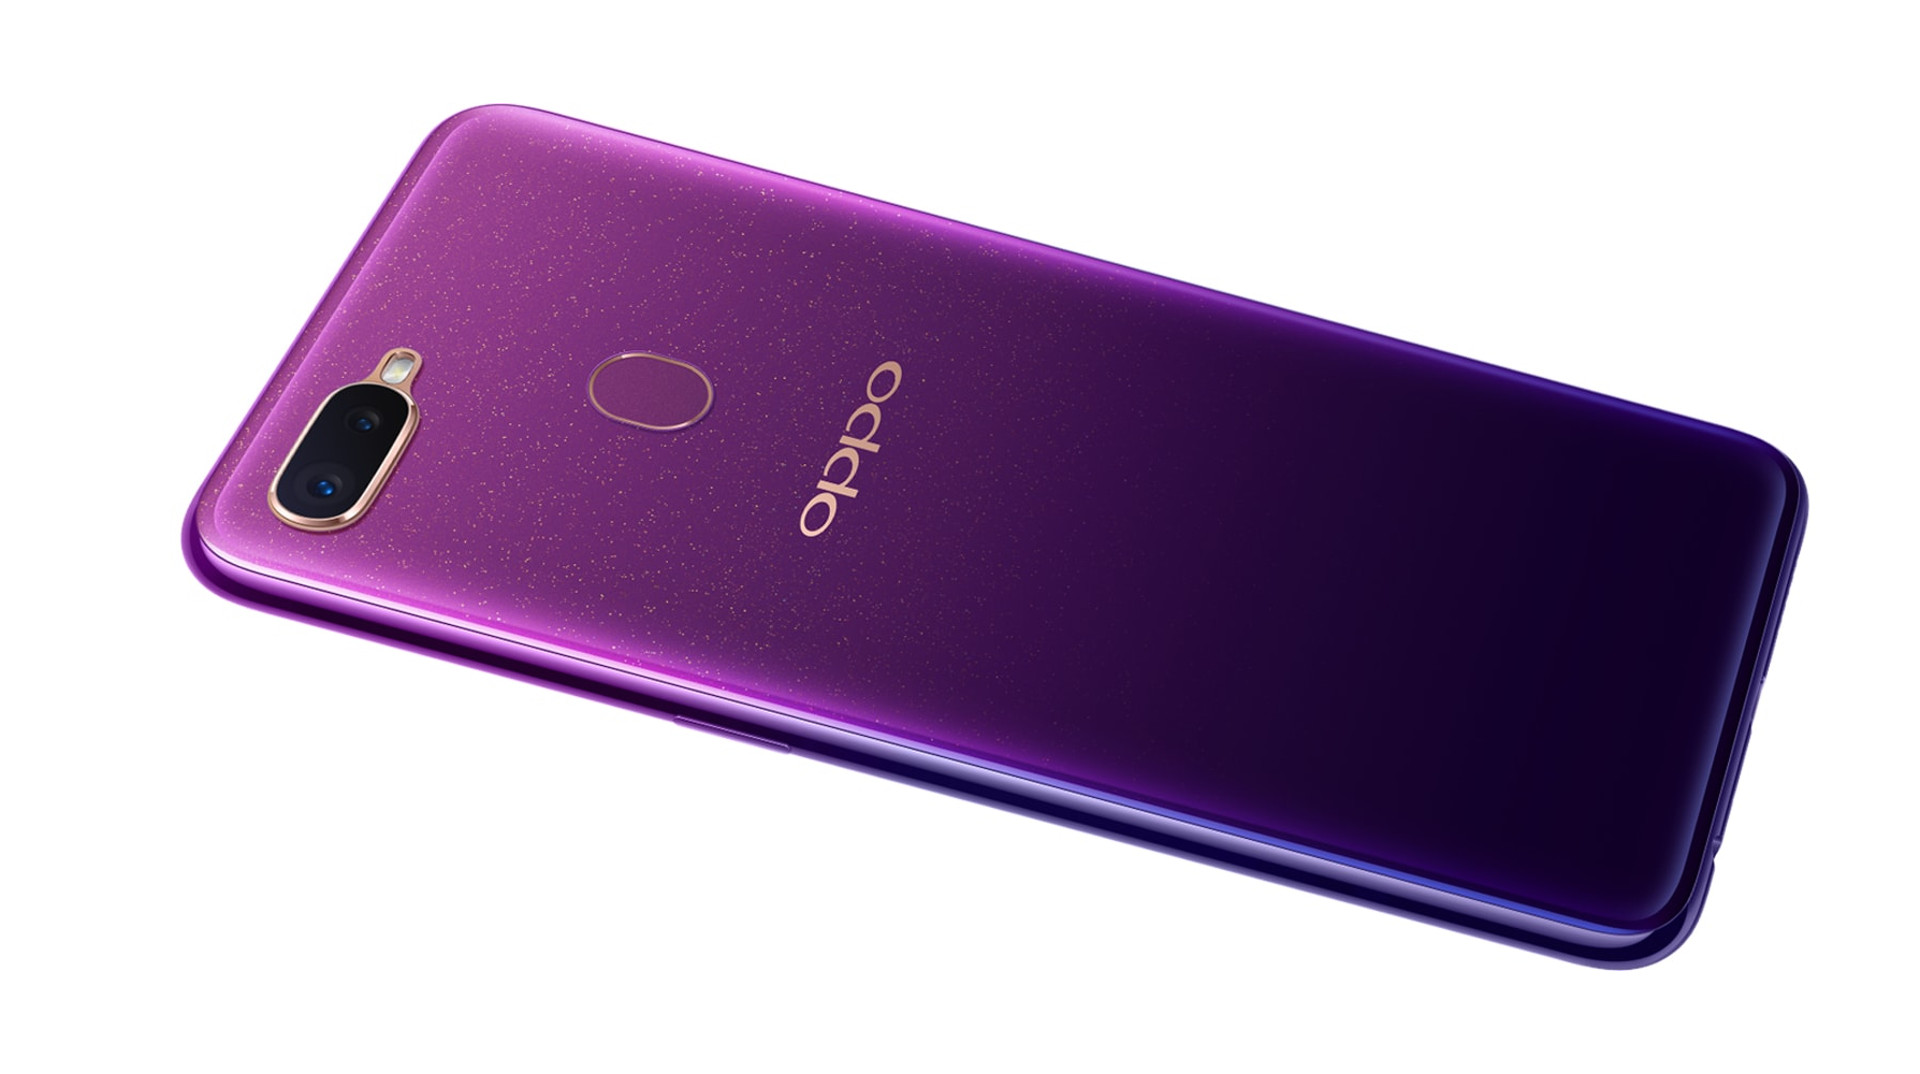 The OPPO F9 in starry purple.